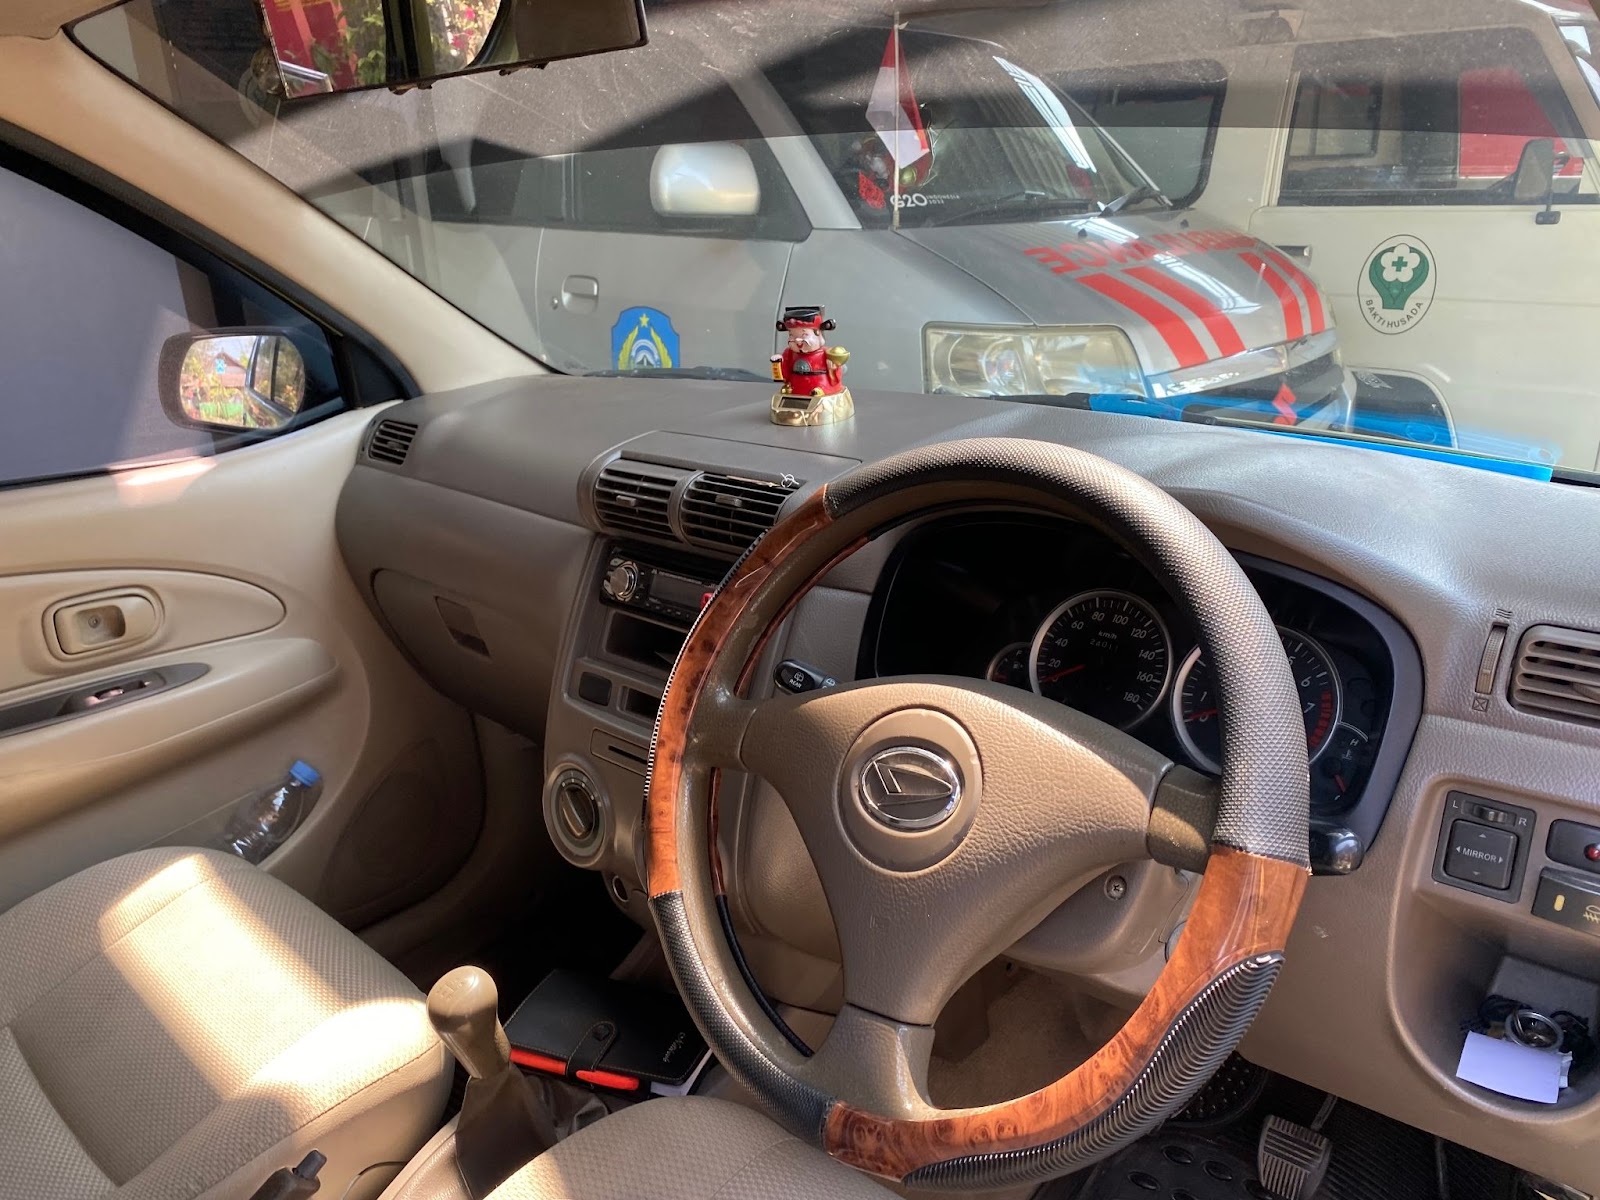 Cara Merawat Interior Mobil Bekas Daihatsu agar Tetap Nyaman dan Bersih